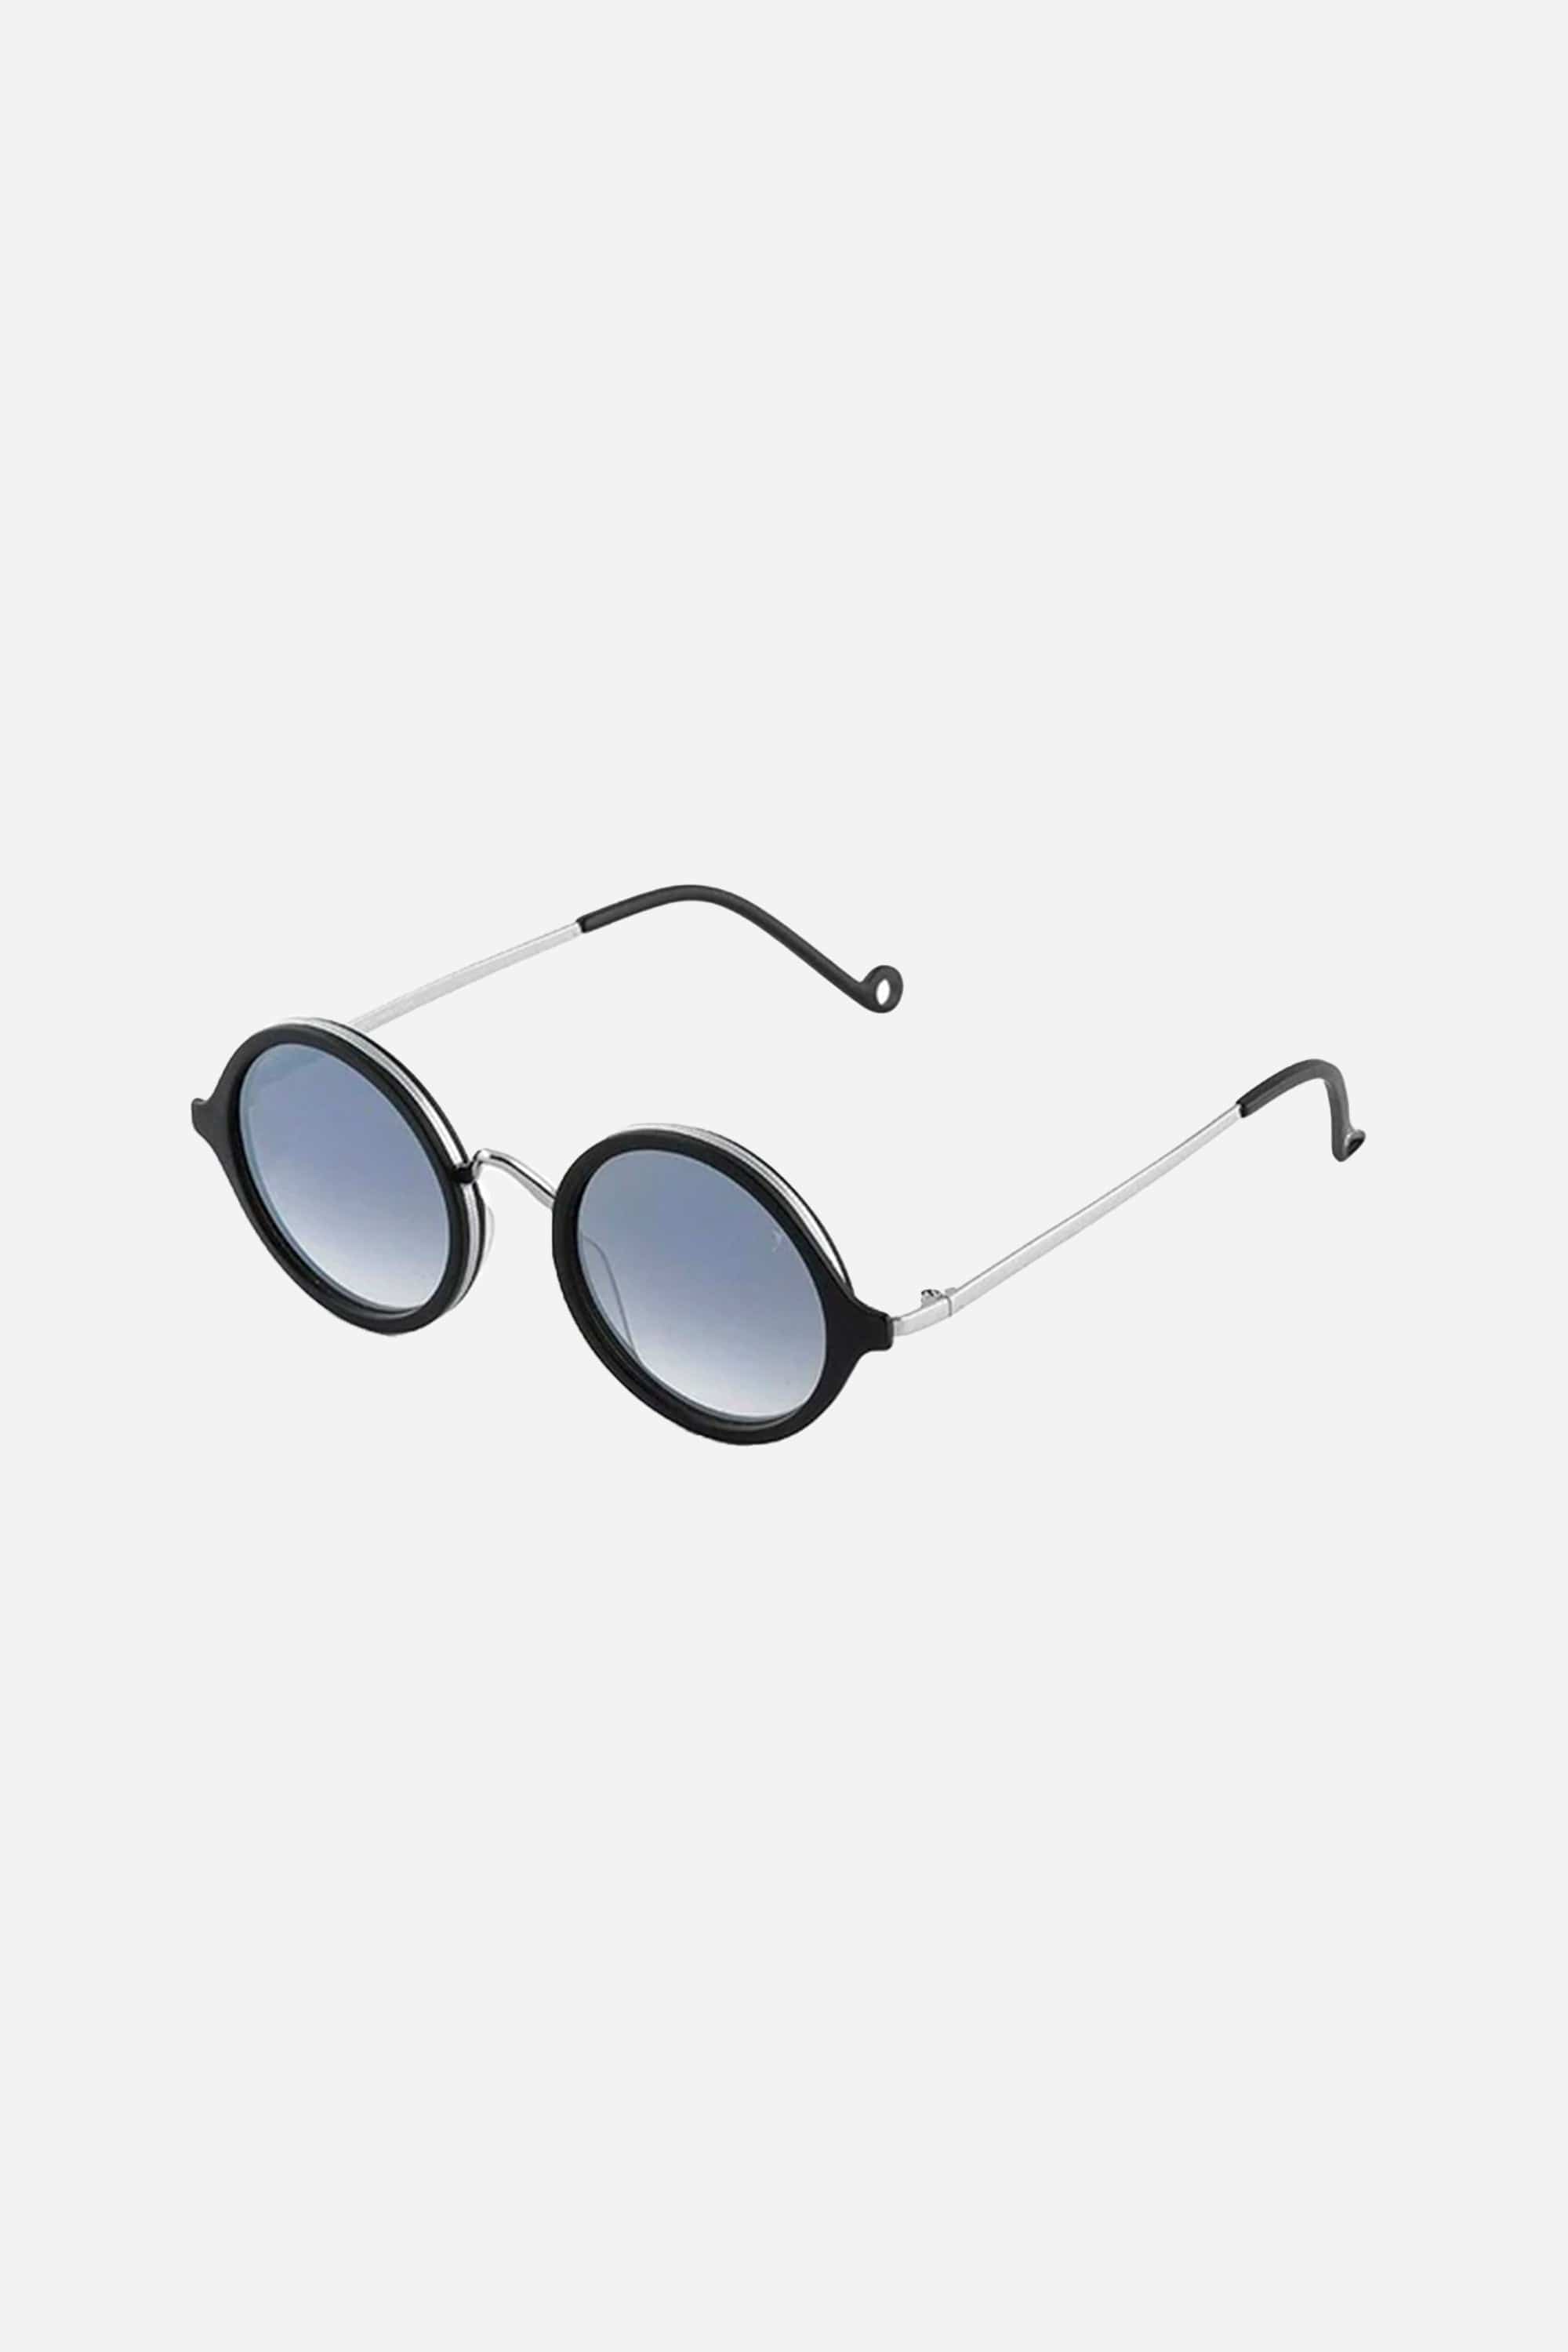 Eyepetizer round Des Art sunglasses - Eyewear Club